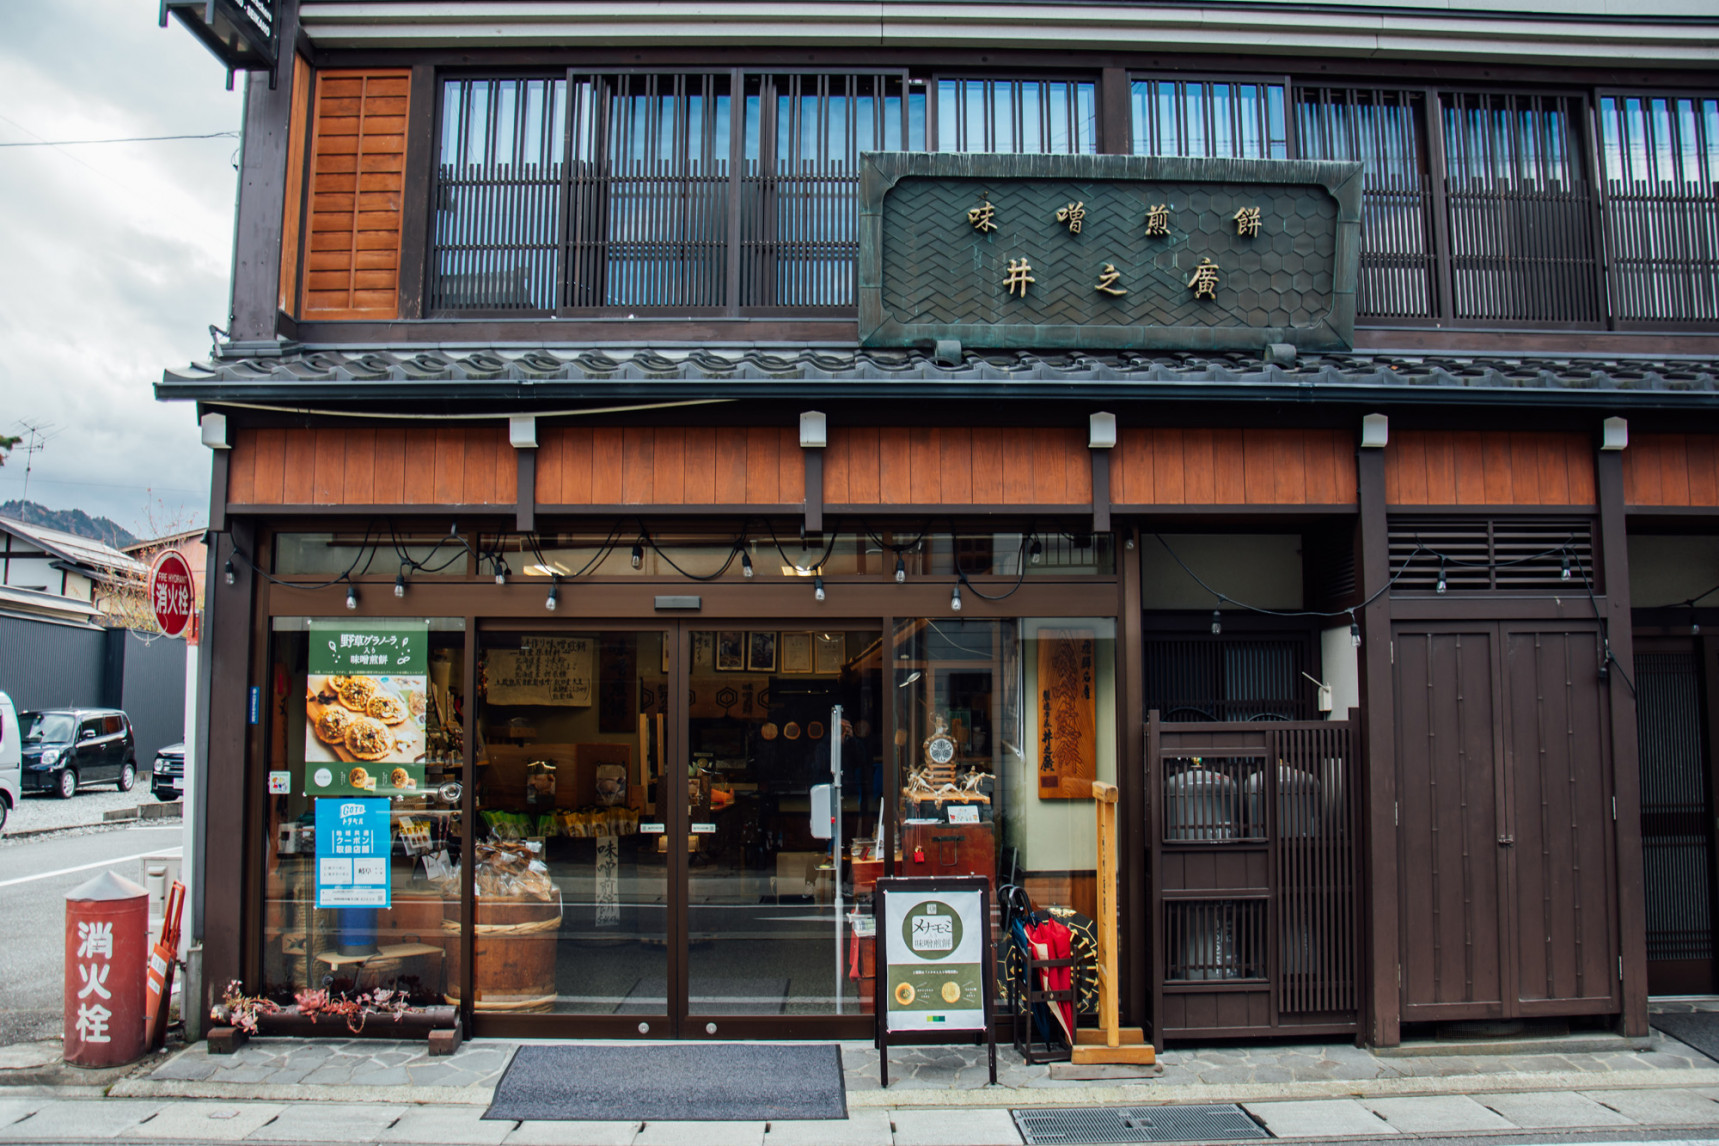 6. Inohiro Confectionery Store